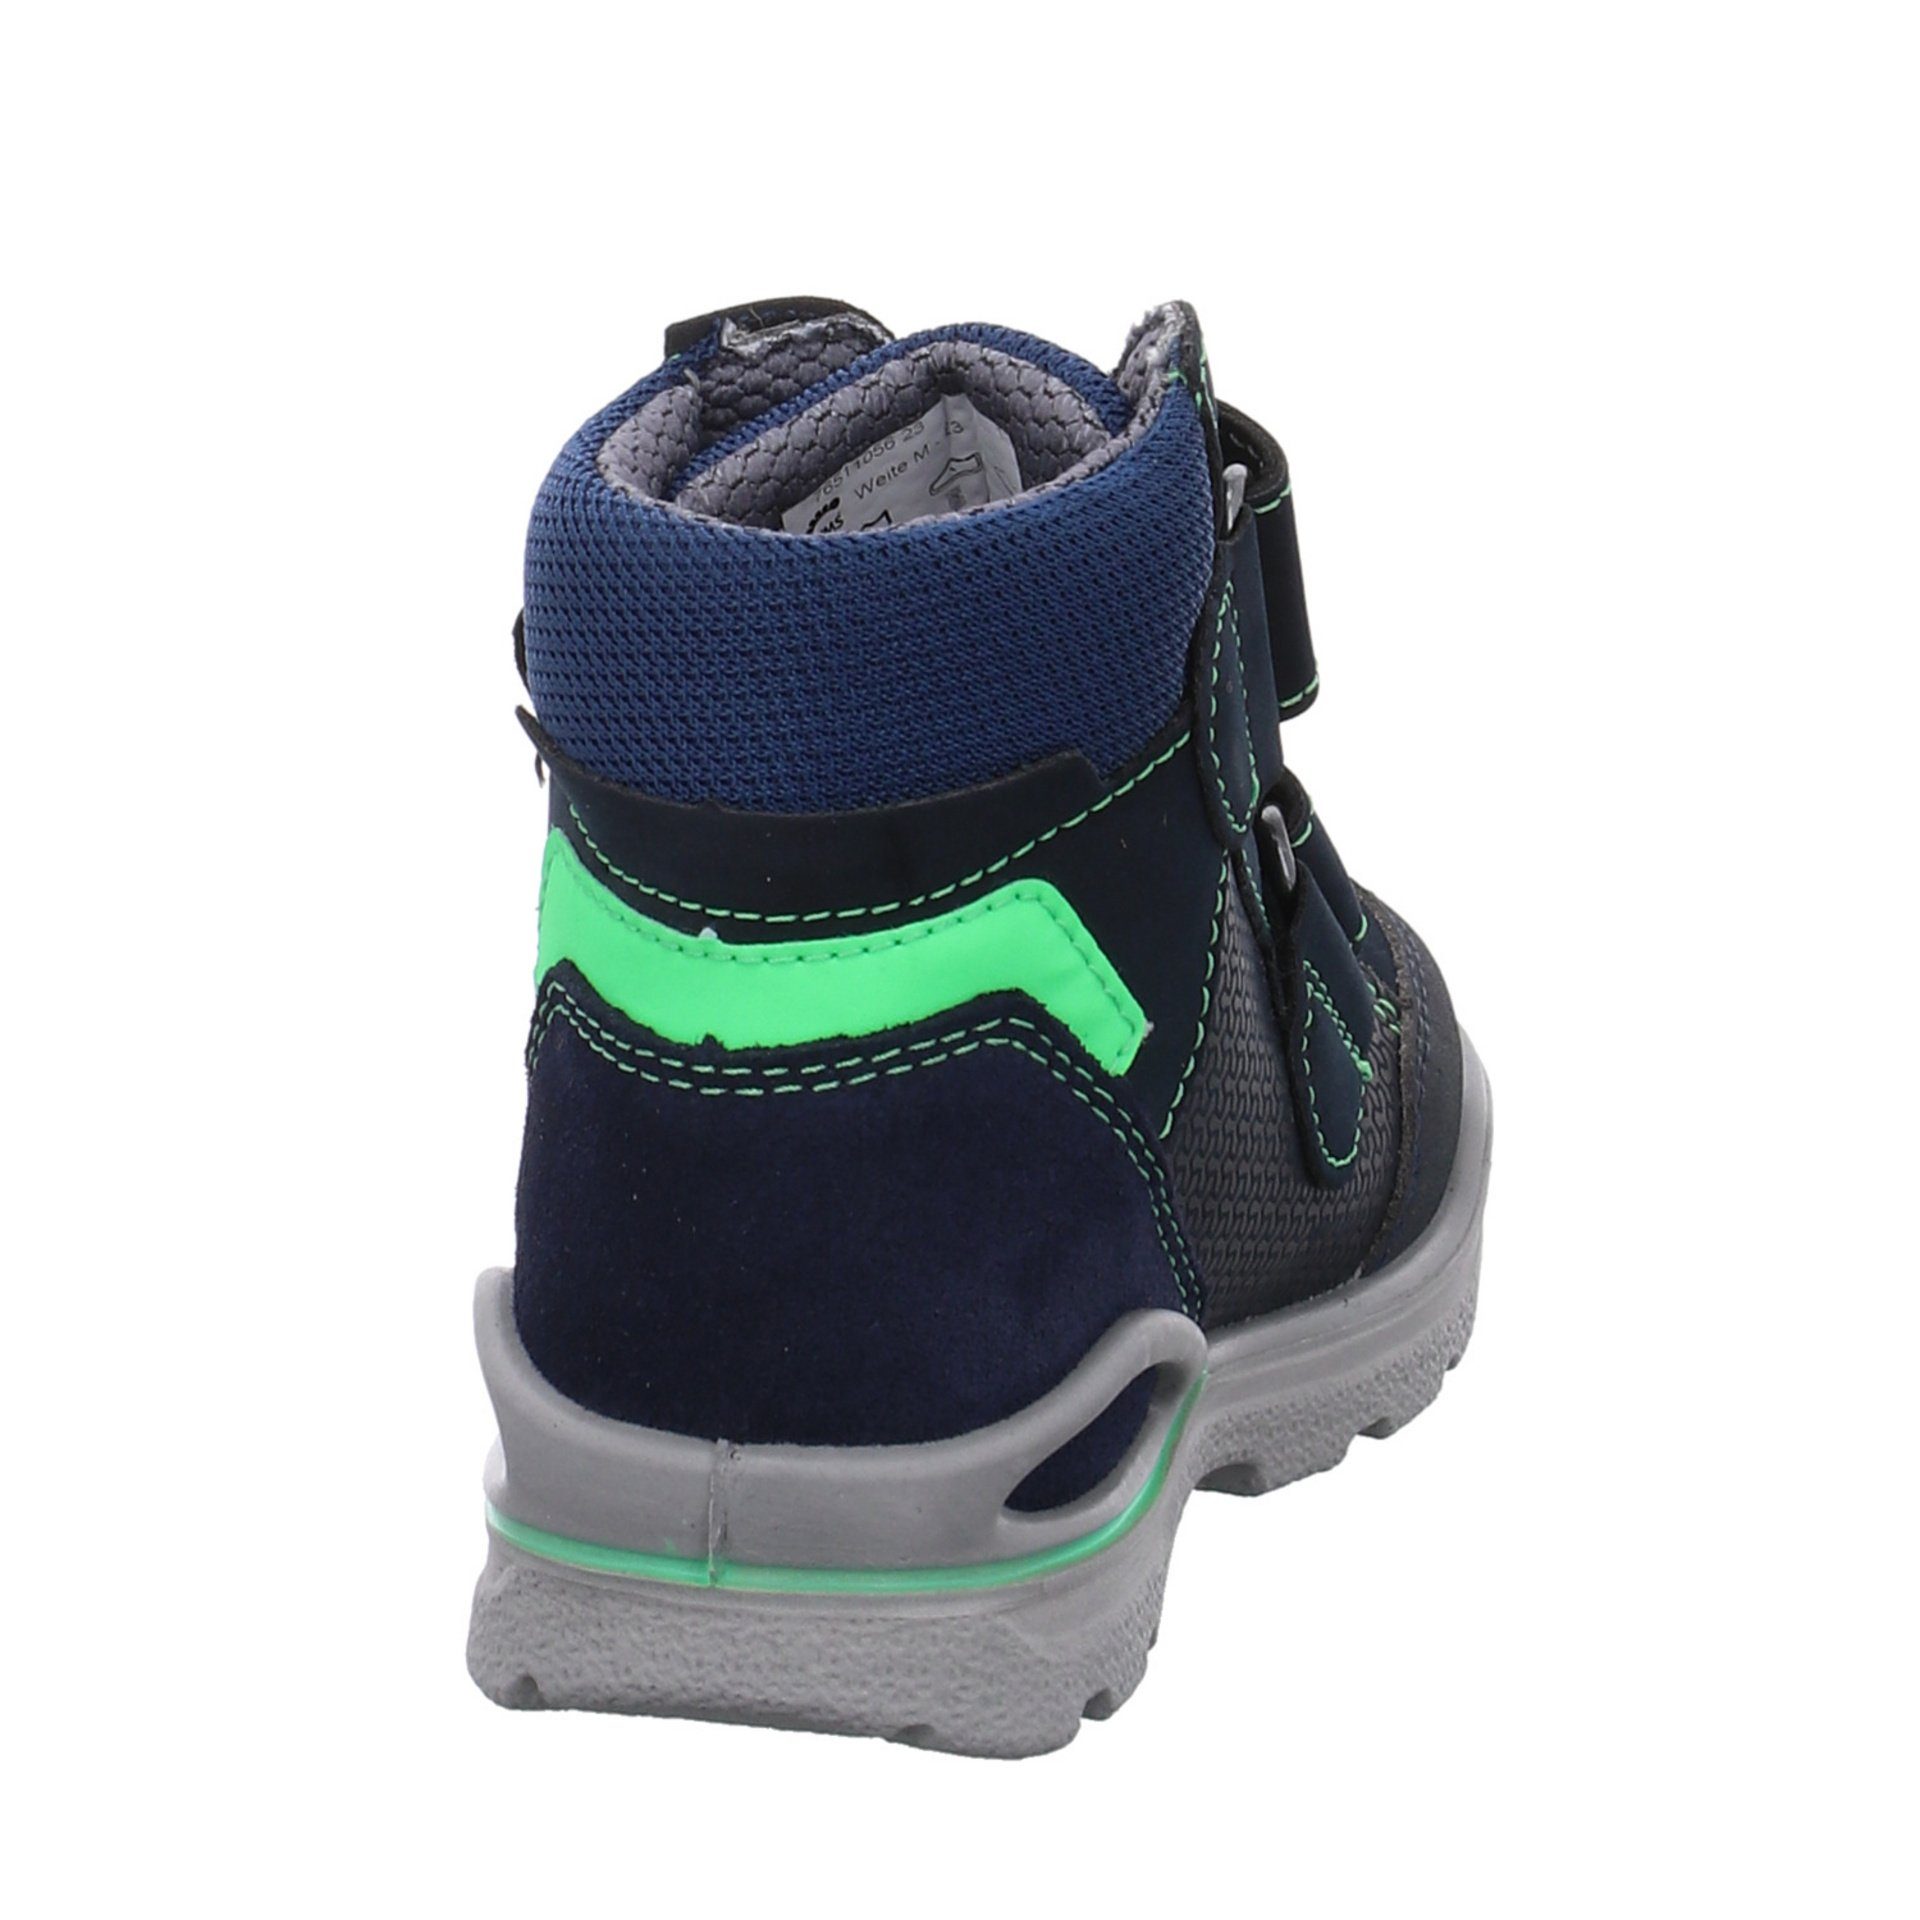 uni Finn Winterboots Kombi Pepino Leder-/Textilkombination Boots Leder-/Textilkombination sonst blau Ricosta